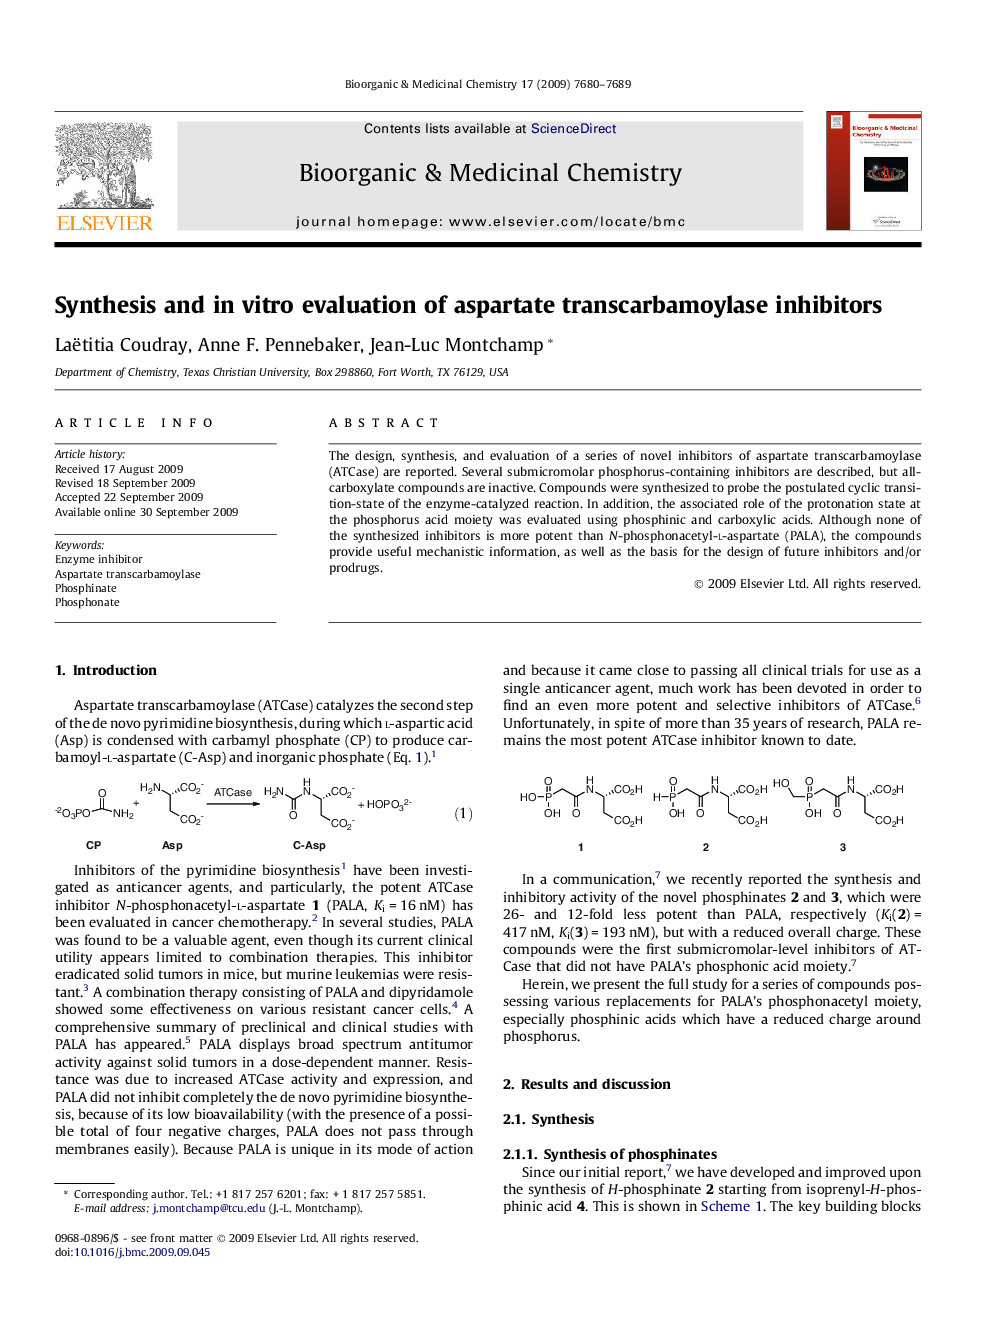 Synthesis and in vitro evaluation of aspartate transcarbamoylase inhibitors